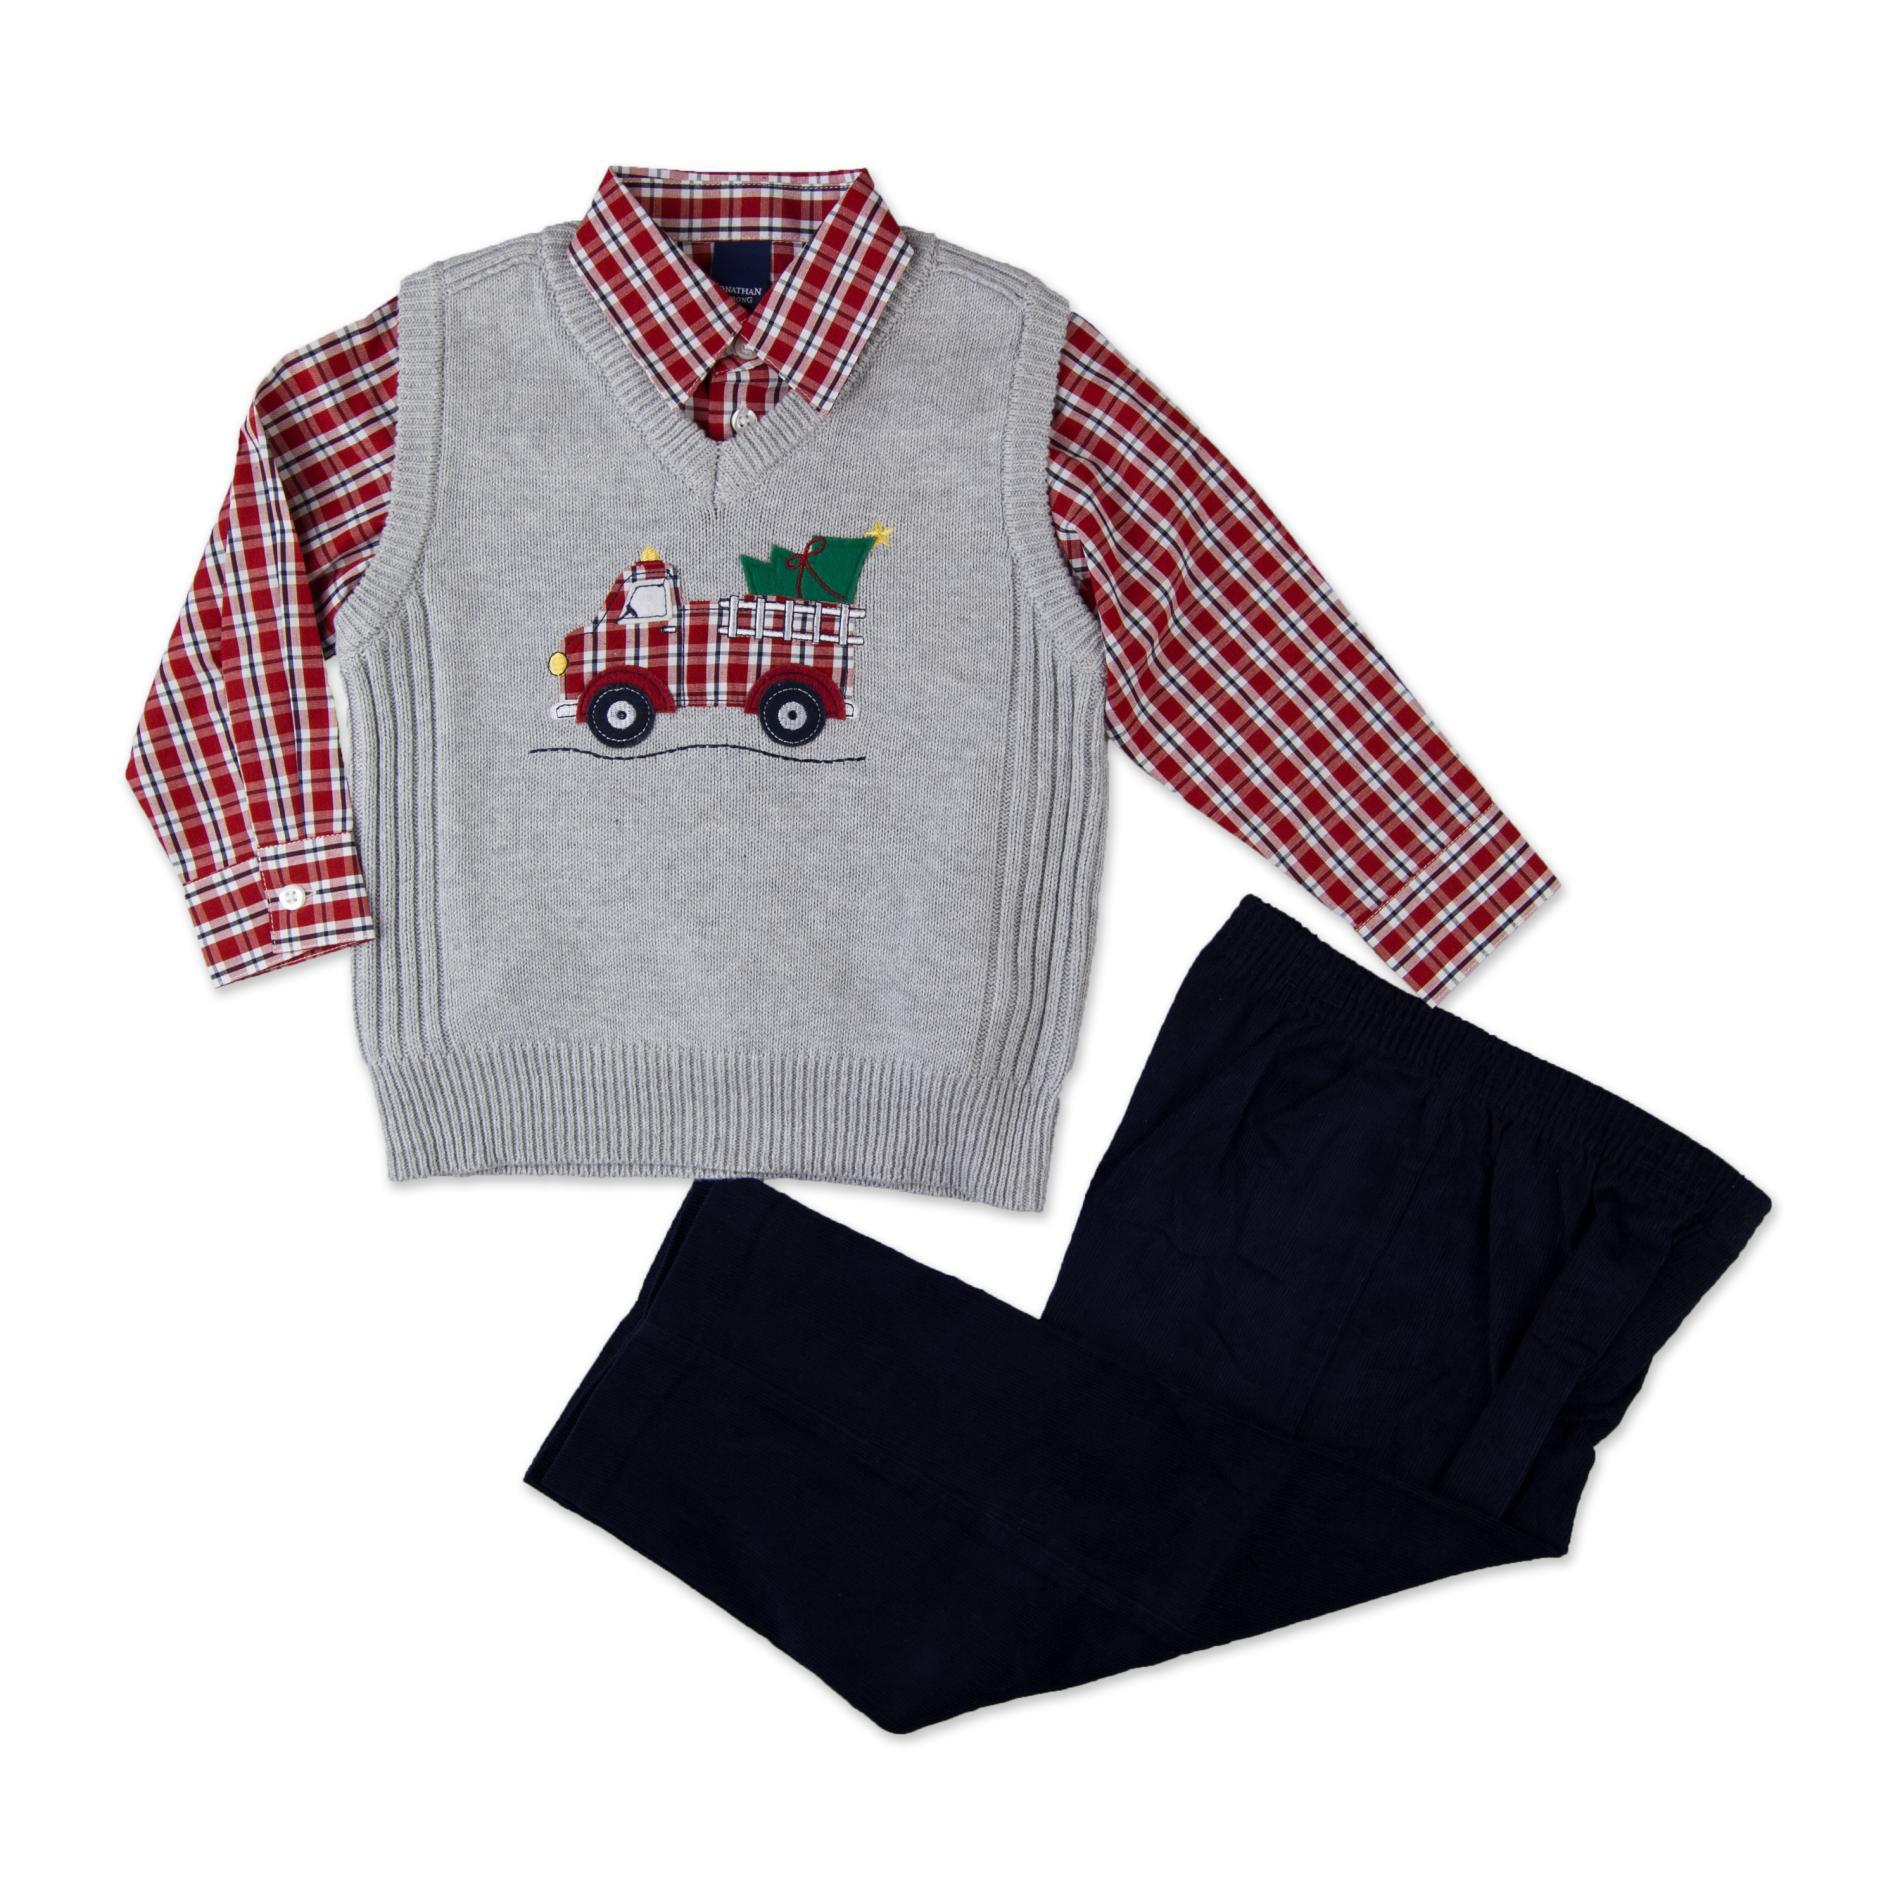 Jonathan Strong Infant & Toddler Boy's Christmas Vest  Shirt & Pants - Truck